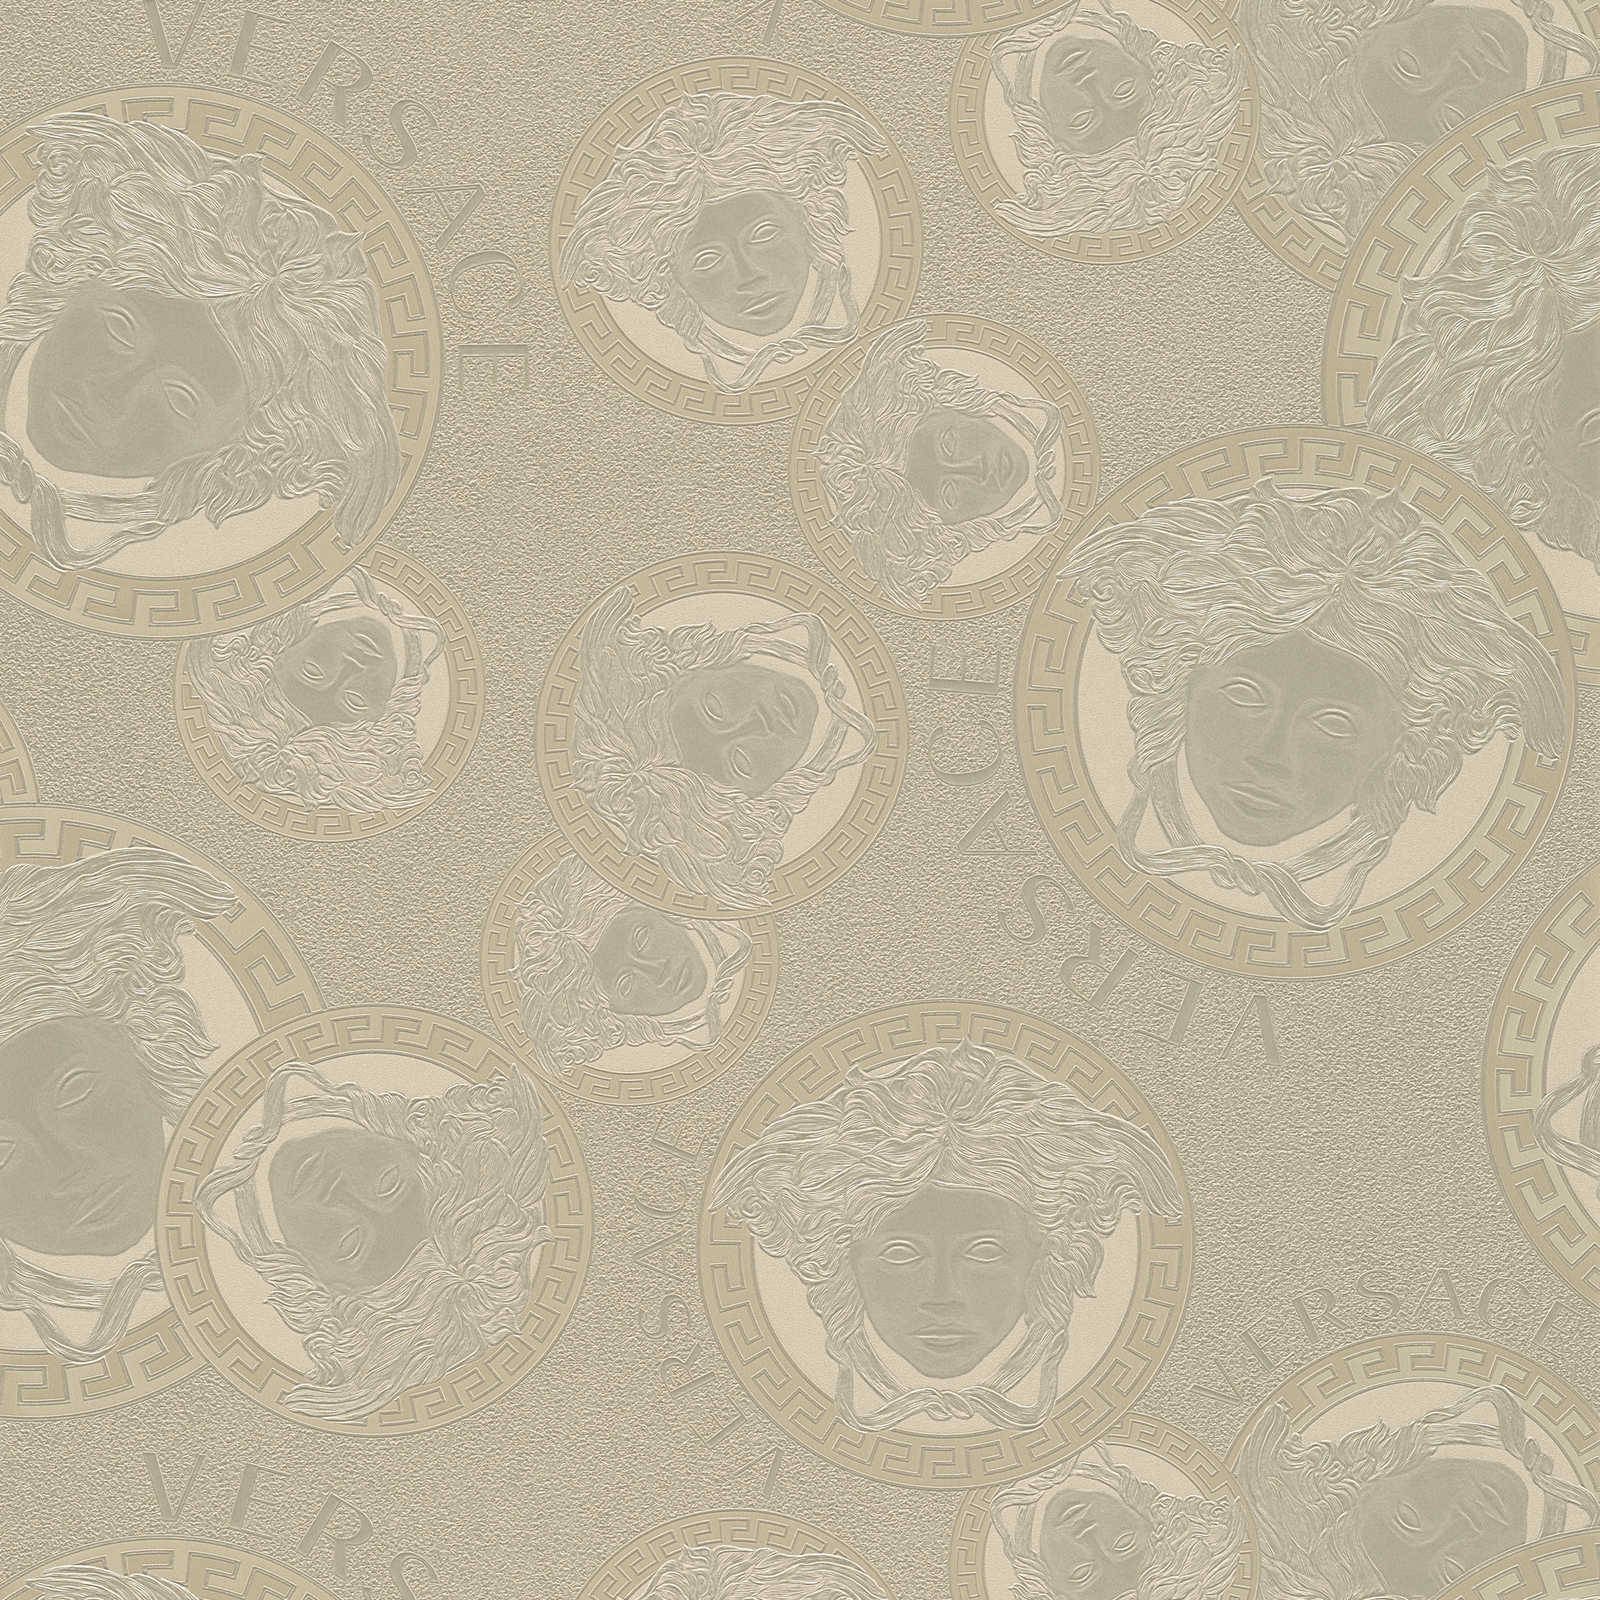         Silver wallpaper metallic medusa design with texture design
    